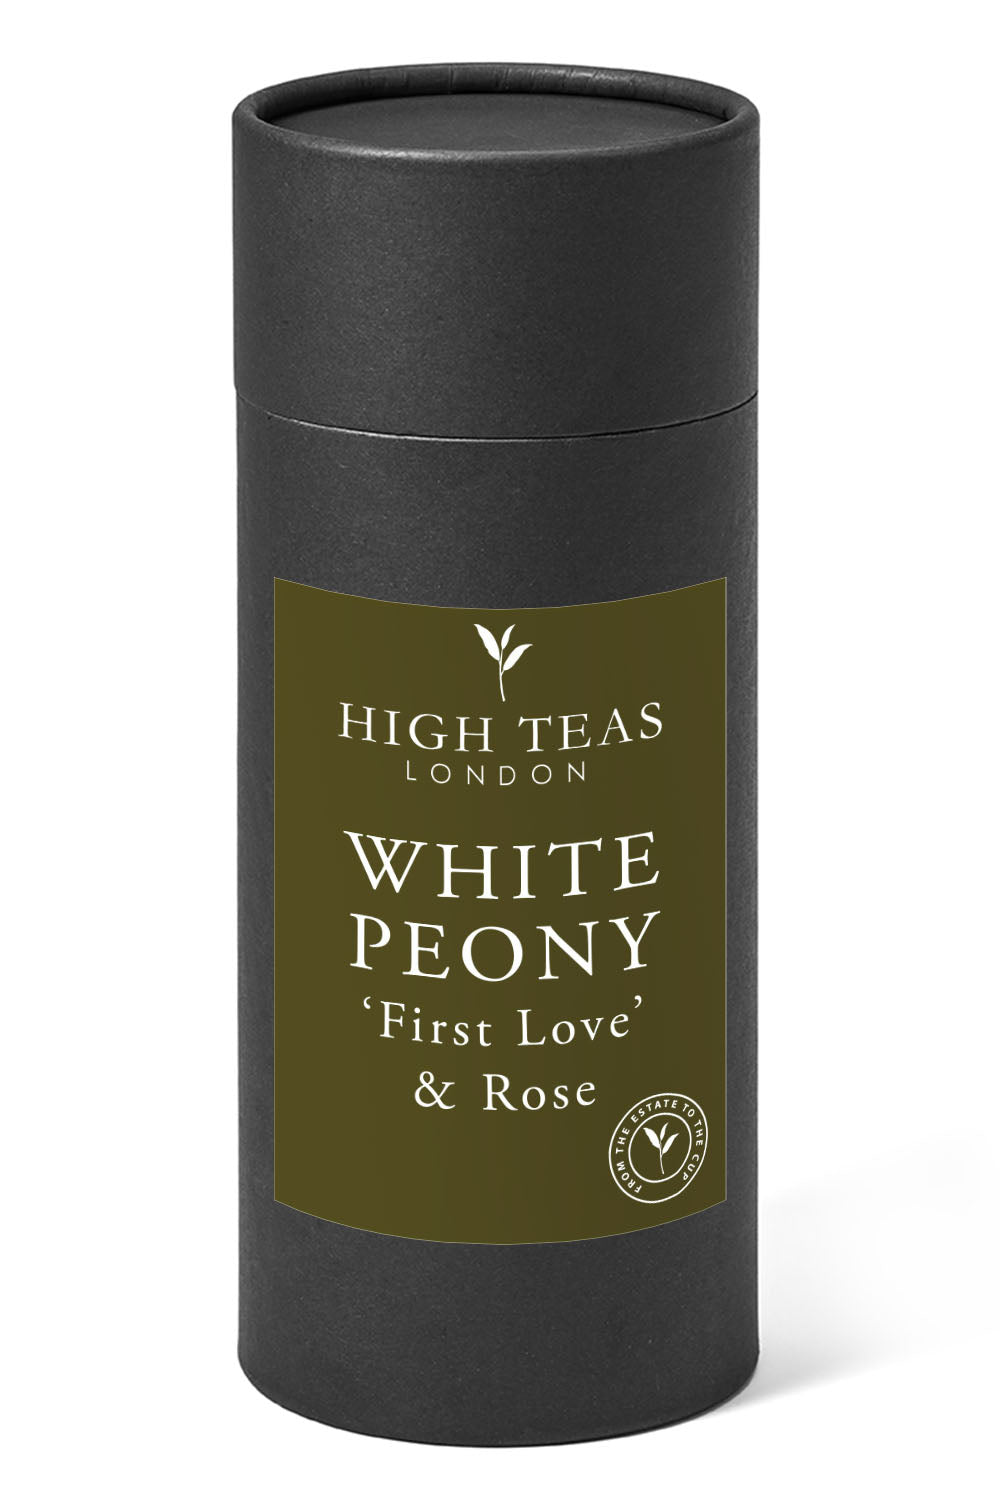 White Peony with Rose Petals aka First Love-150g gift-Loose Leaf Tea-High Teas